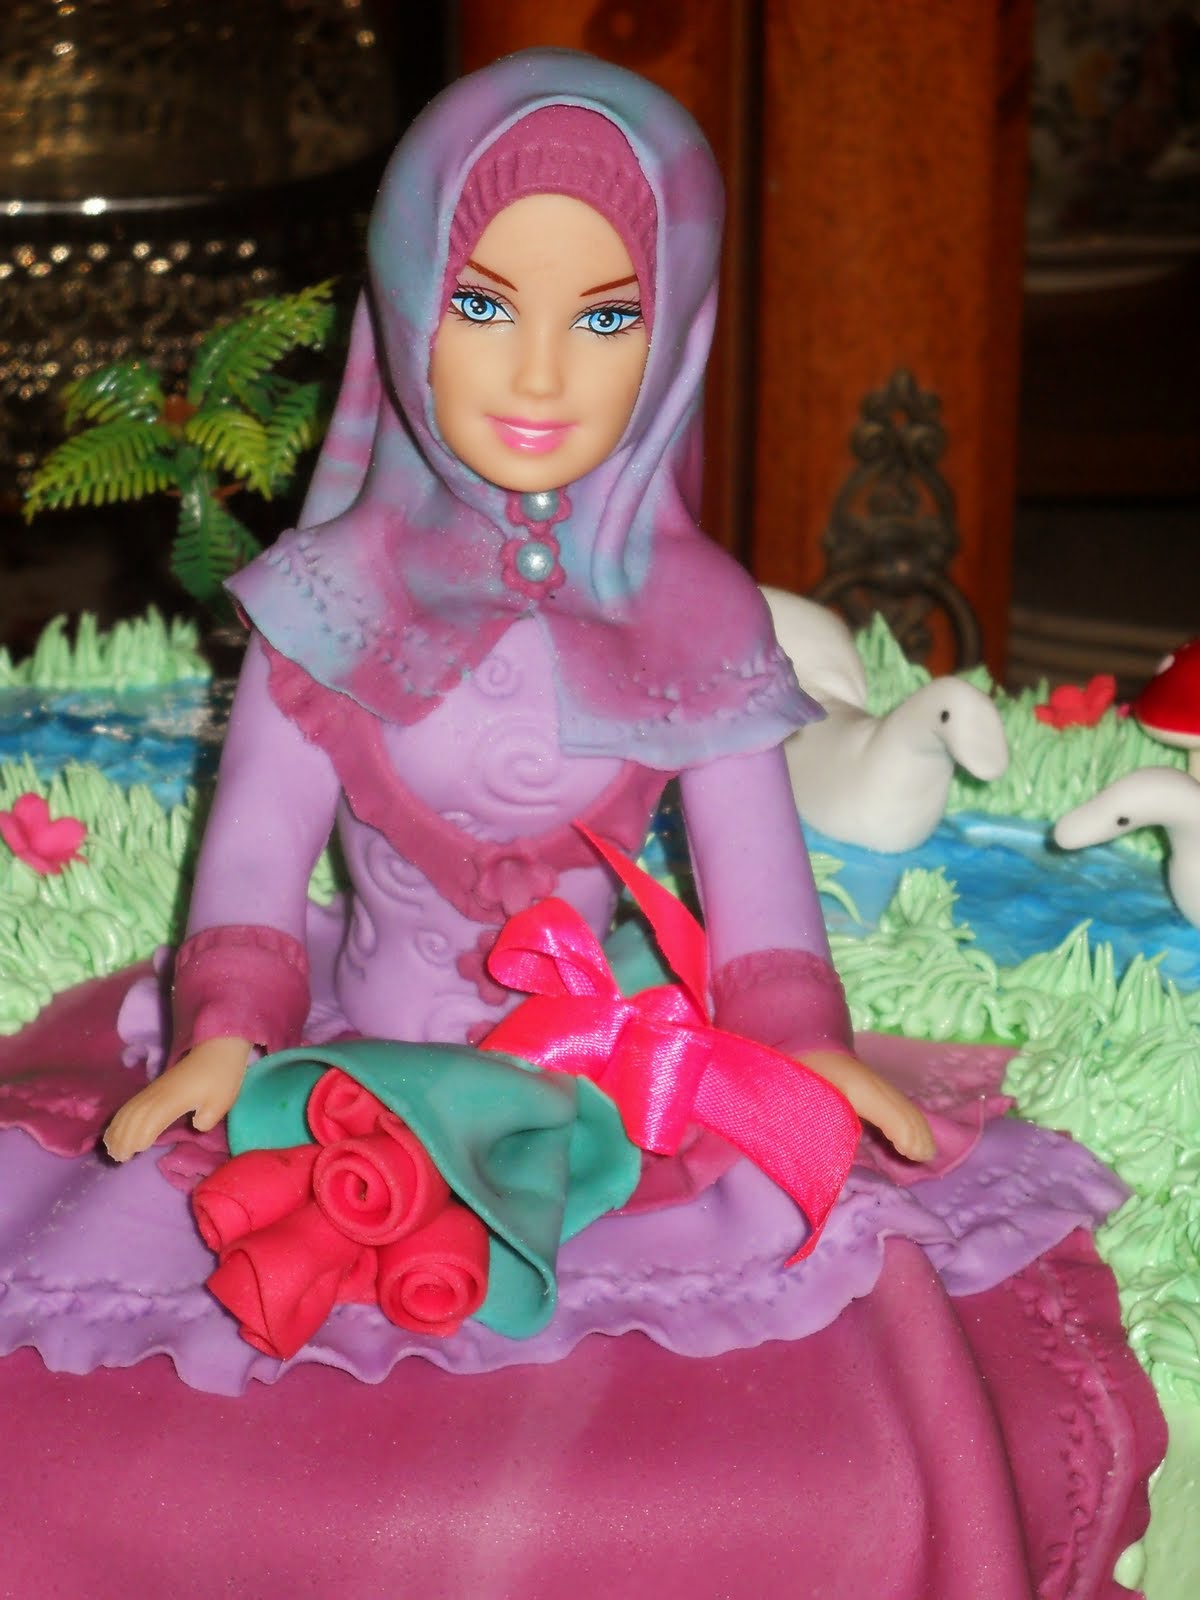 Kumpulan Gambar Boneka Barbie Muslim Cantik Dan Keren Untuk Anak 2015